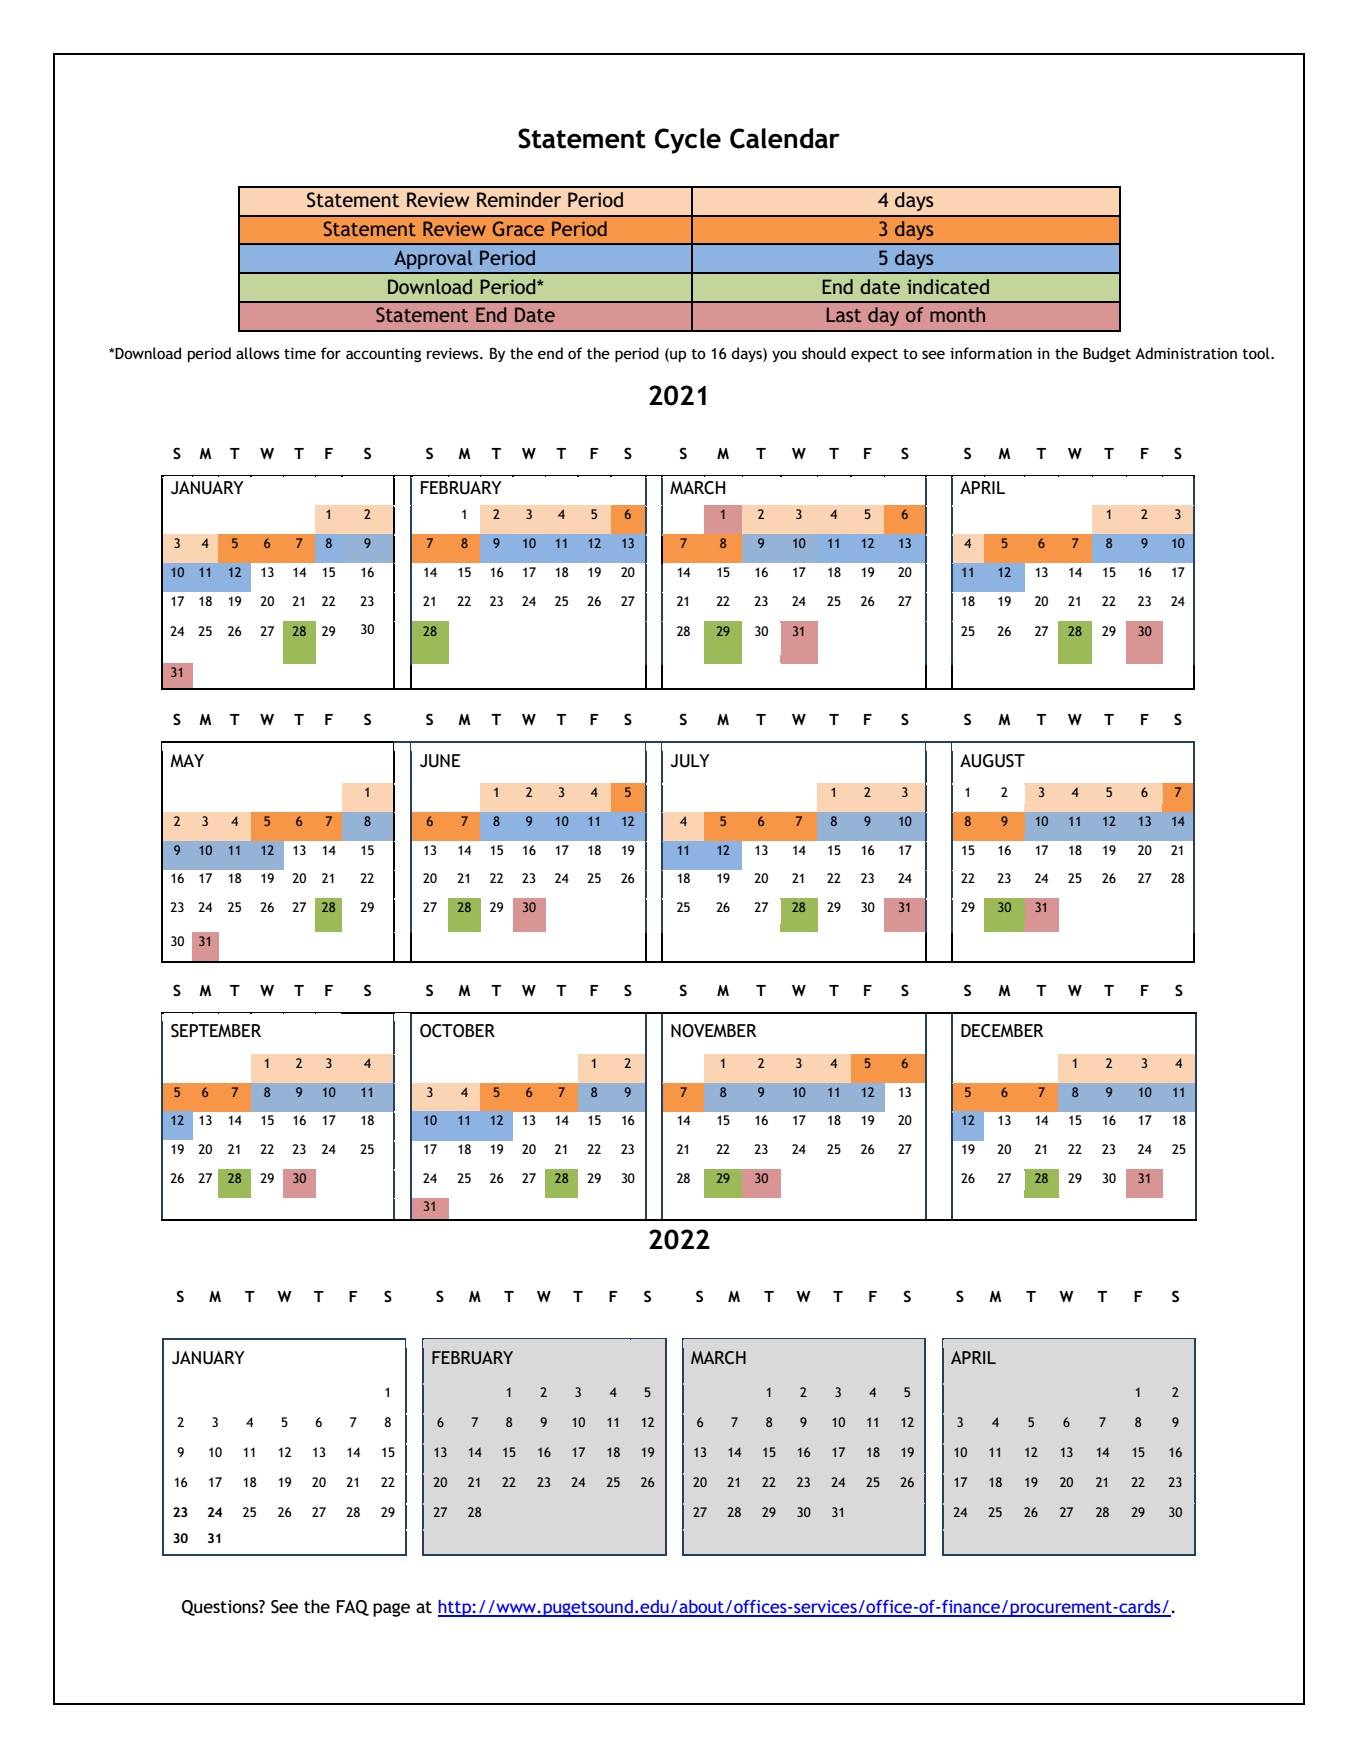 2021 statement cycle calendar jpg University of Puget Sound